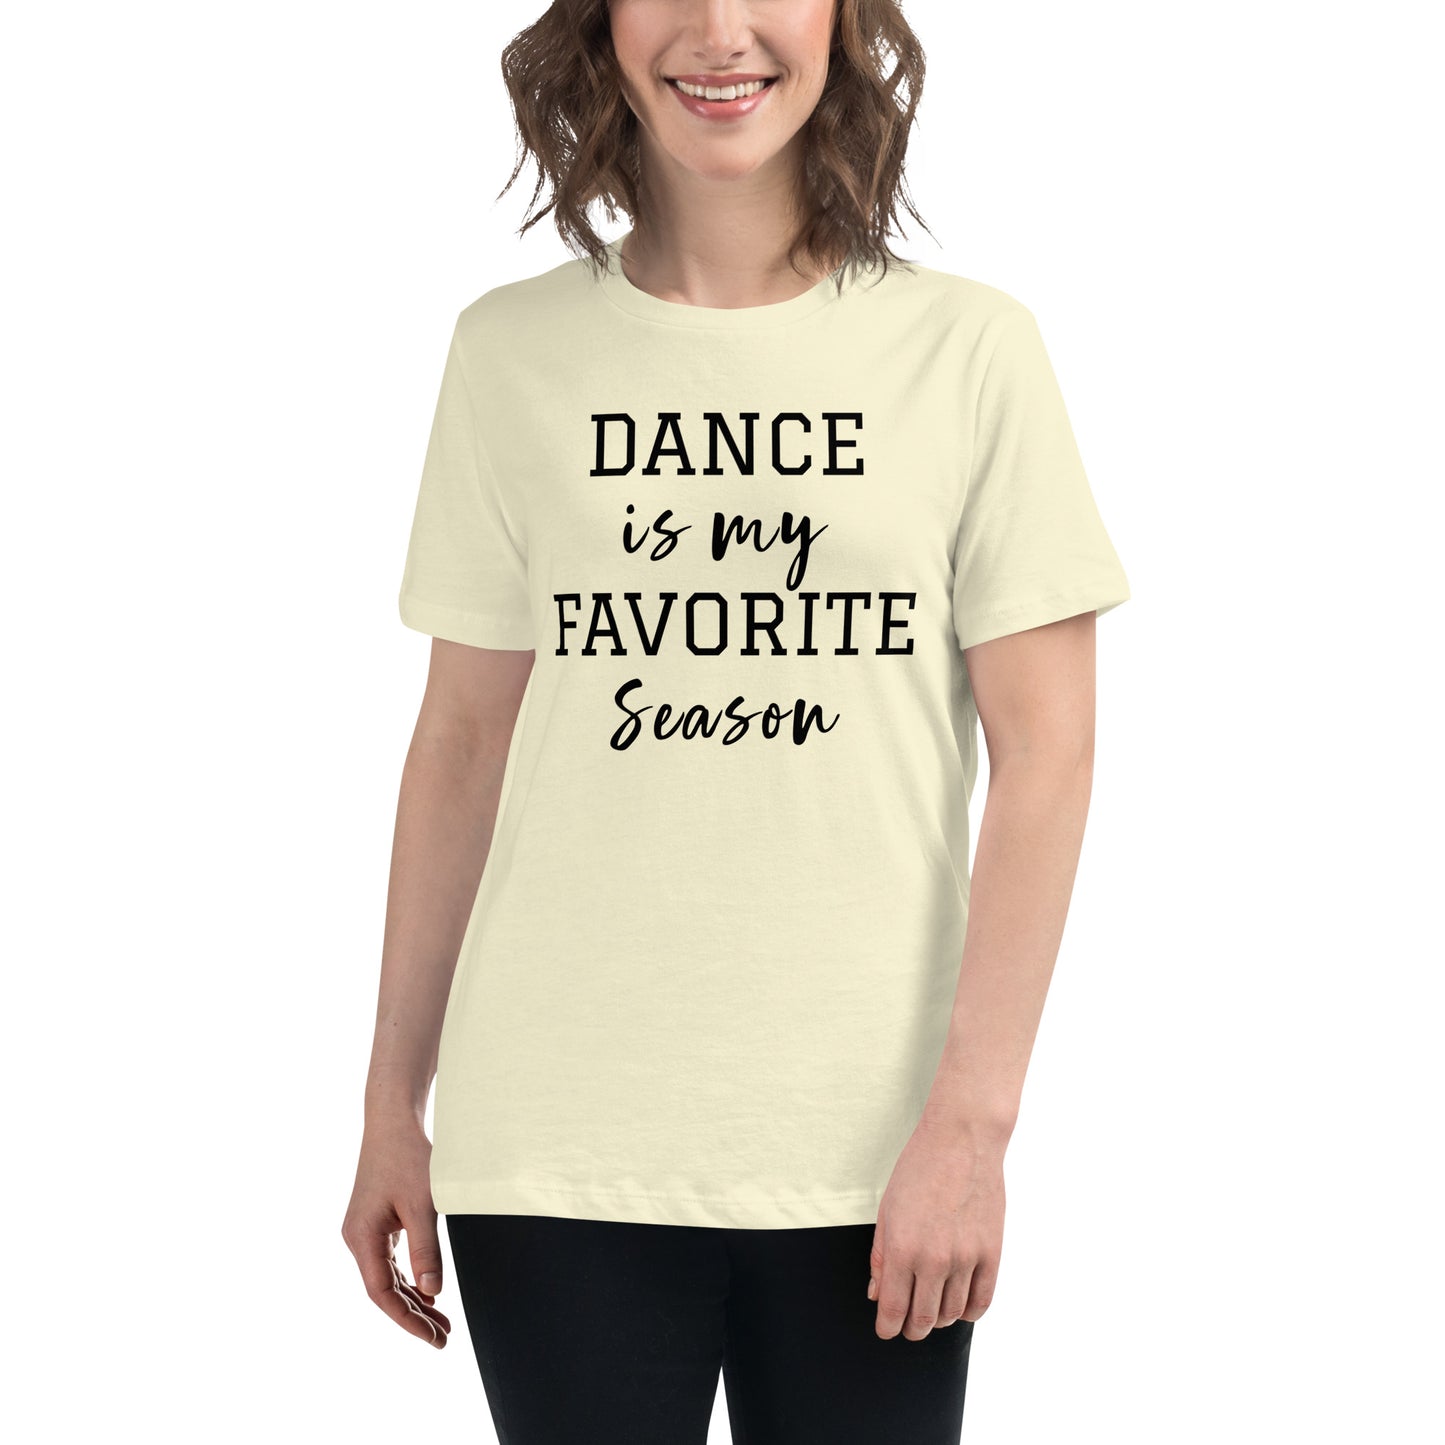 Ladies "Dance is my Favorite Season" Relaxed T-Shirt